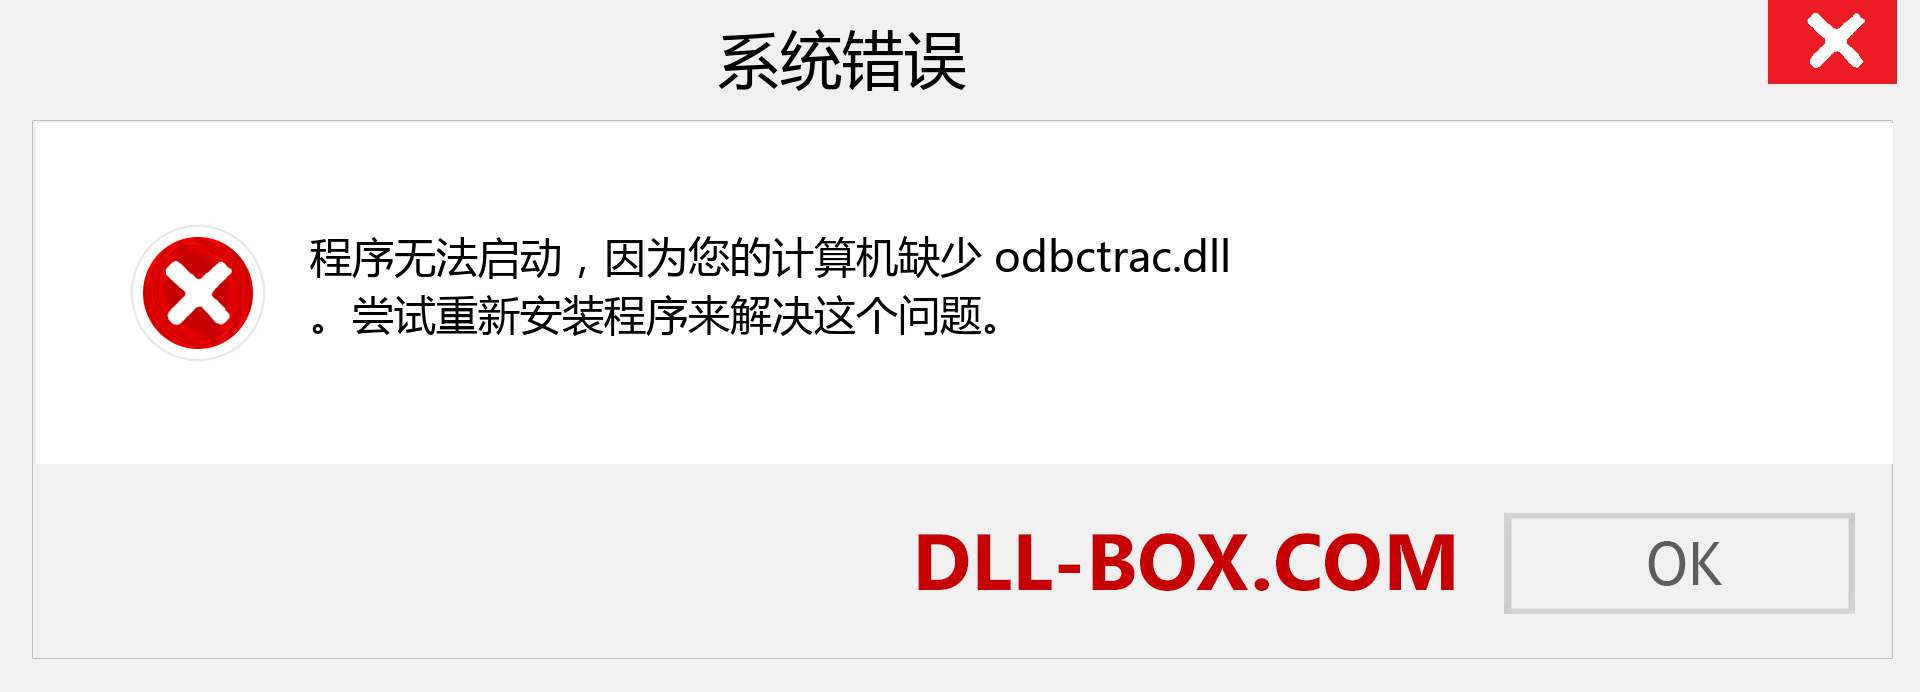 odbctrac.dll 文件丢失？。 适用于 Windows 7、8、10 的下载 - 修复 Windows、照片、图像上的 odbctrac dll 丢失错误